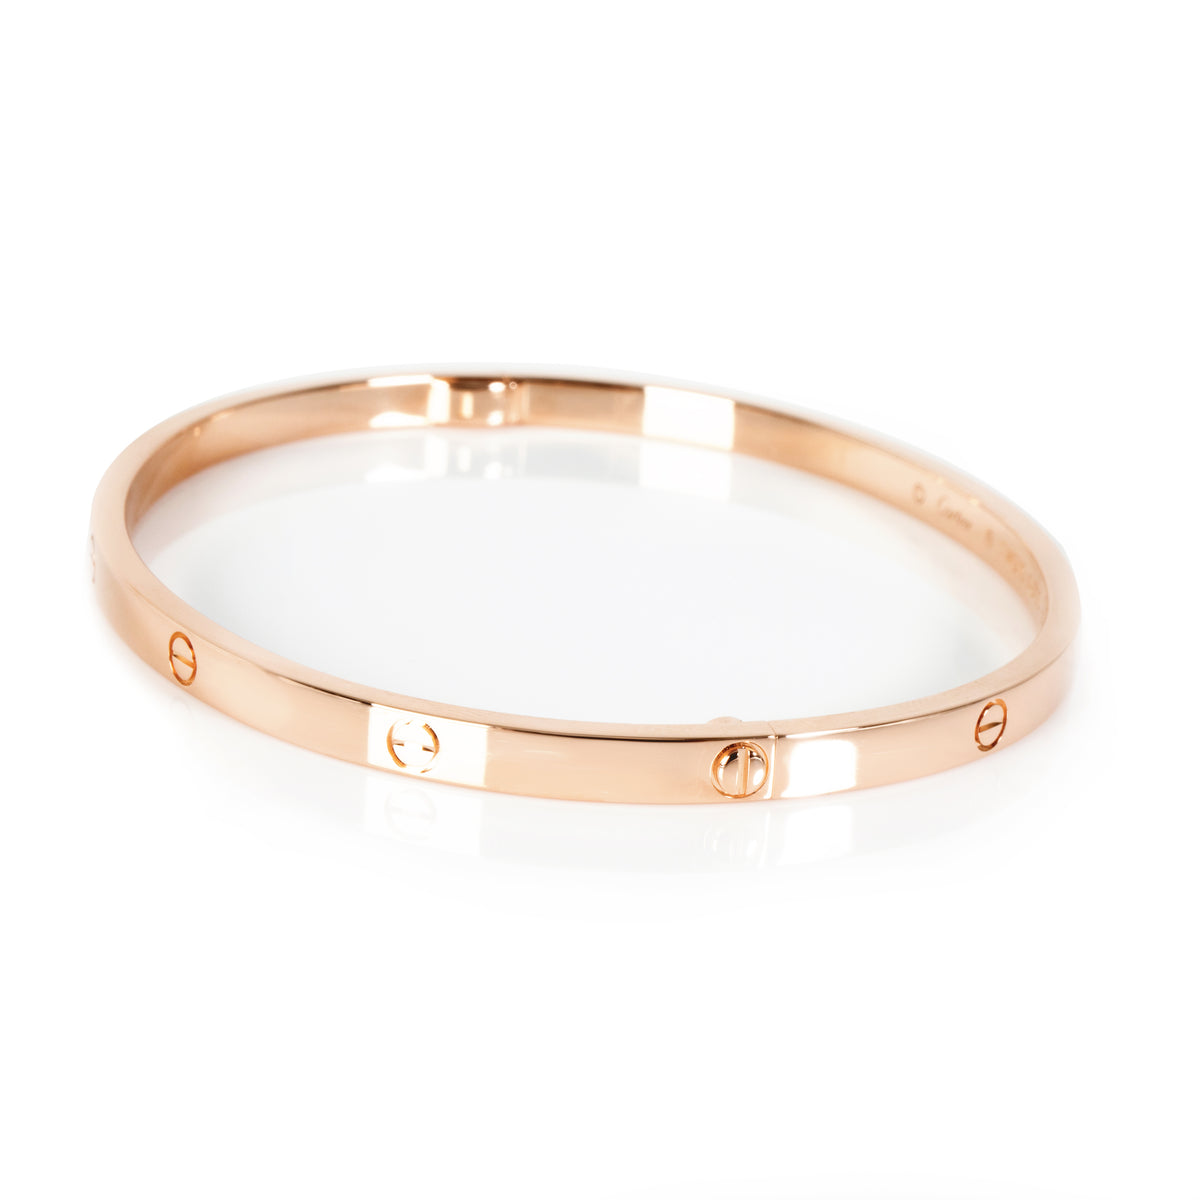 Cartier Love Bracelet in 18K Rose Gold